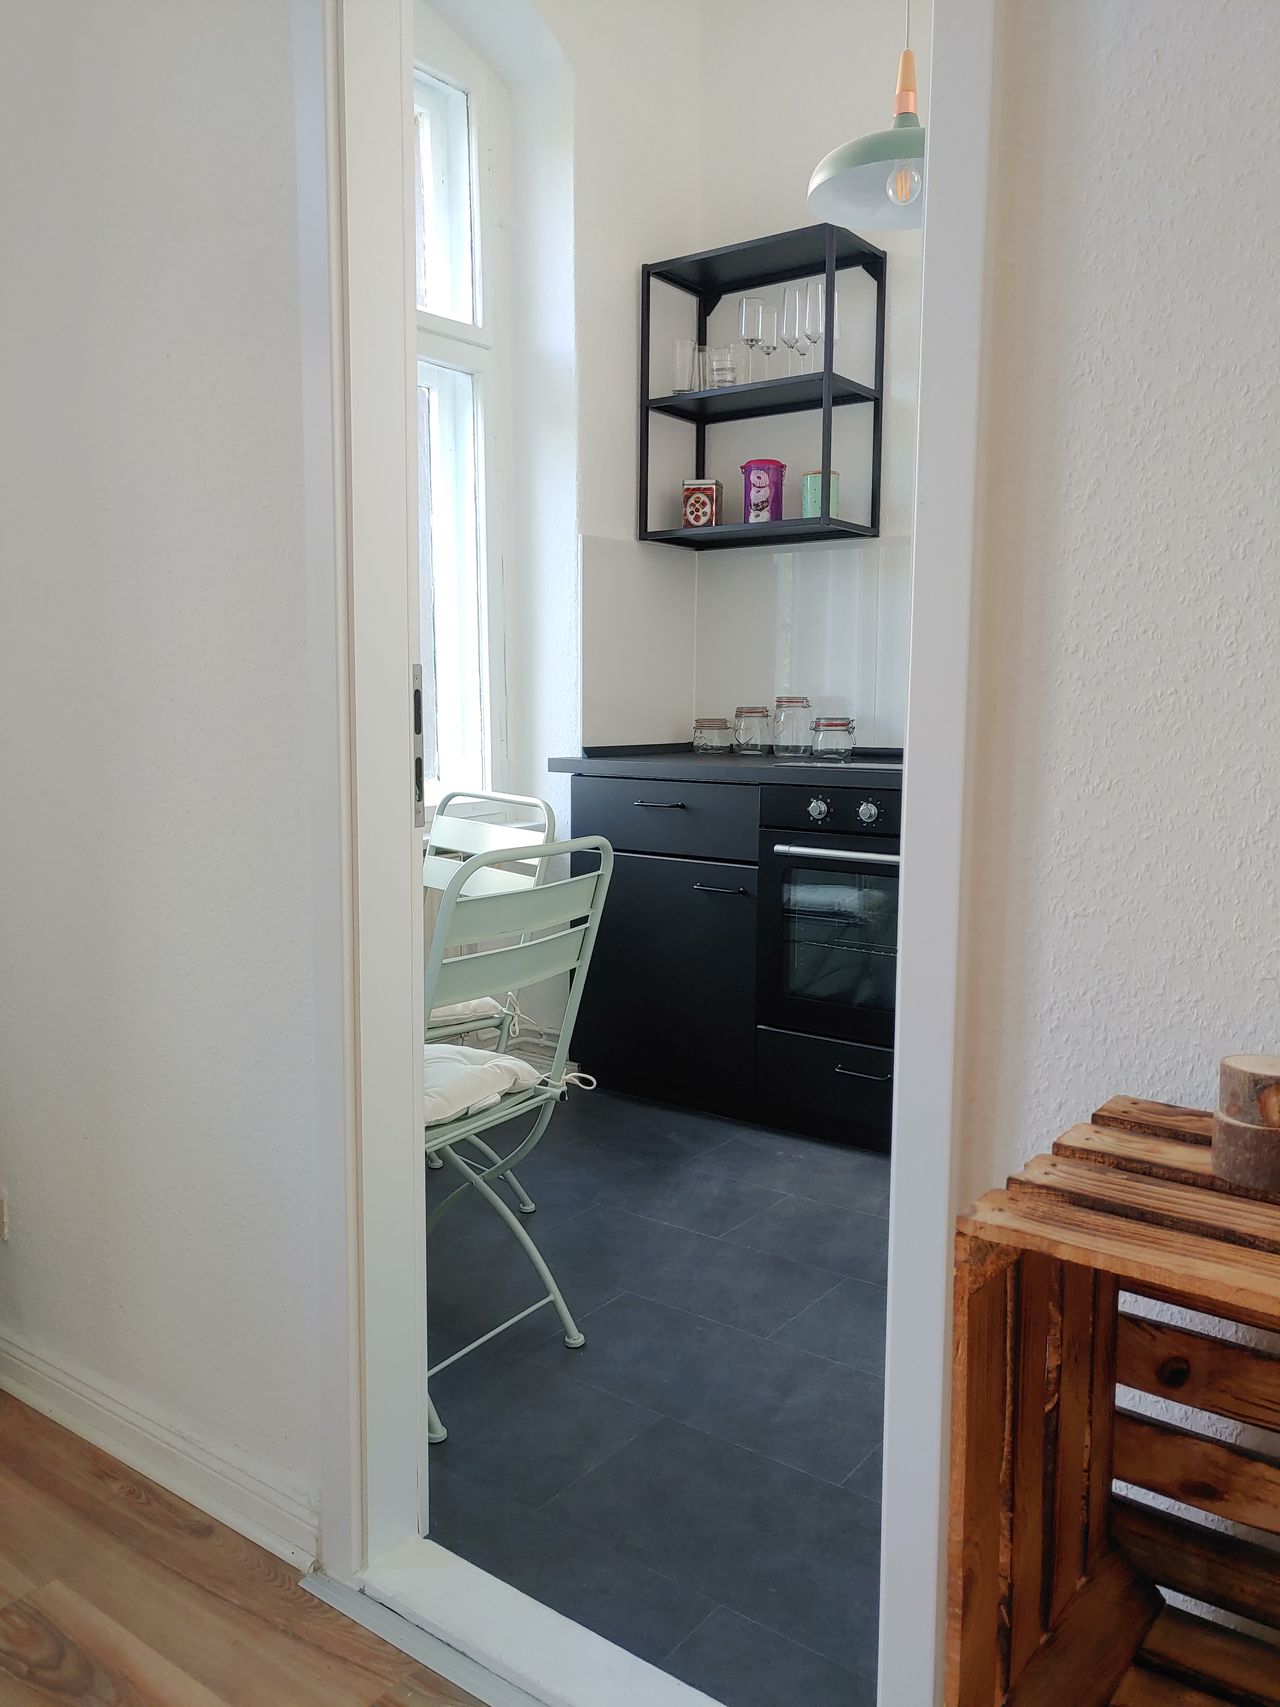 Cosy newly renovated 1 room flat in Friedrichshain